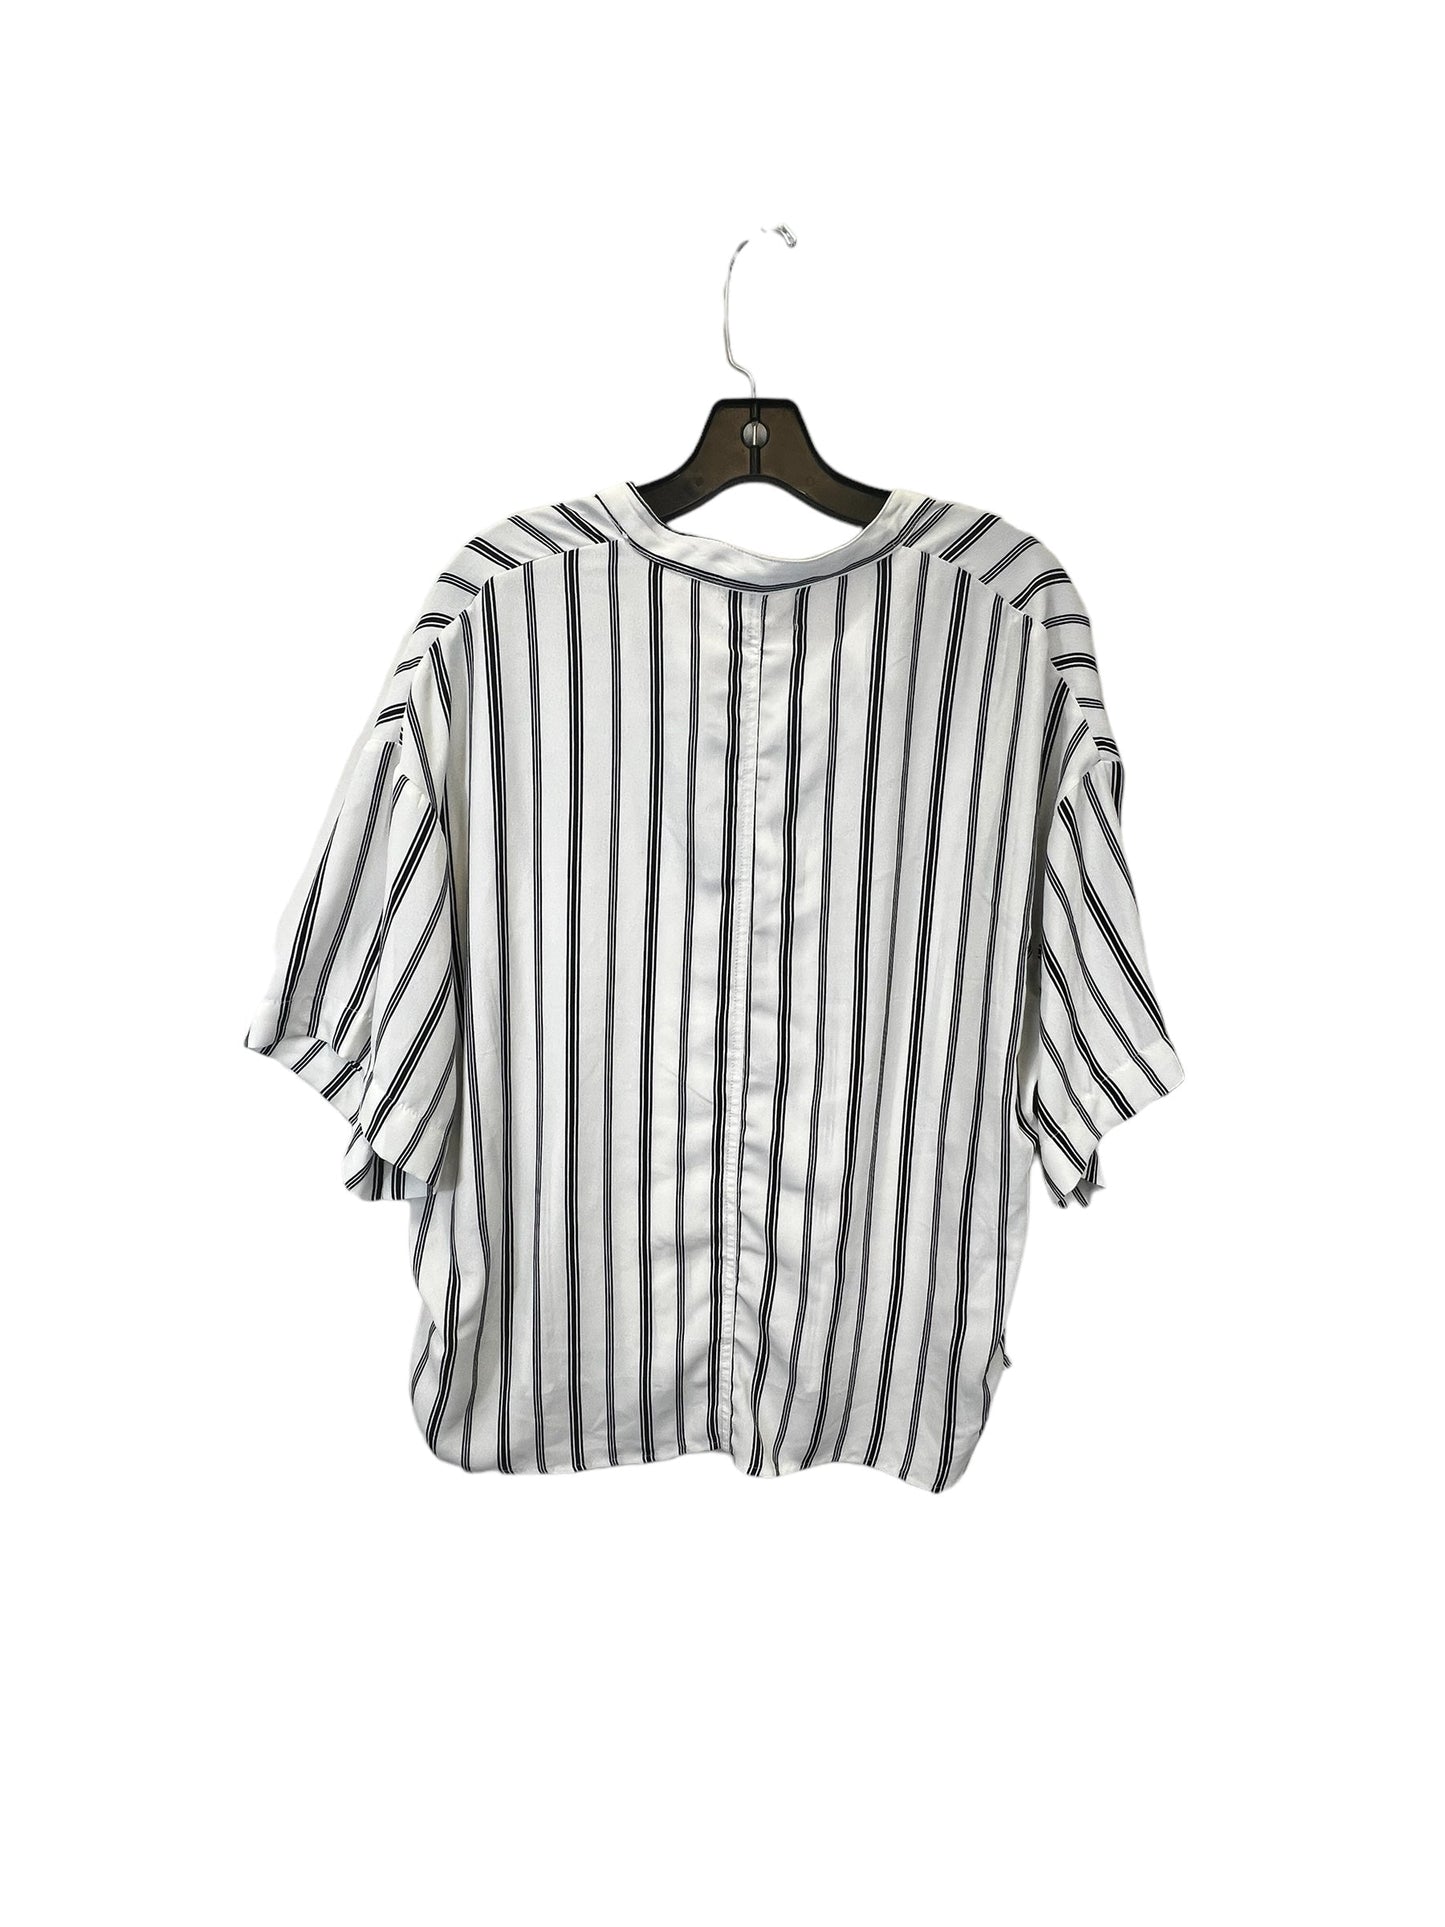 Black & White Top Short Sleeve Melloday, Size M